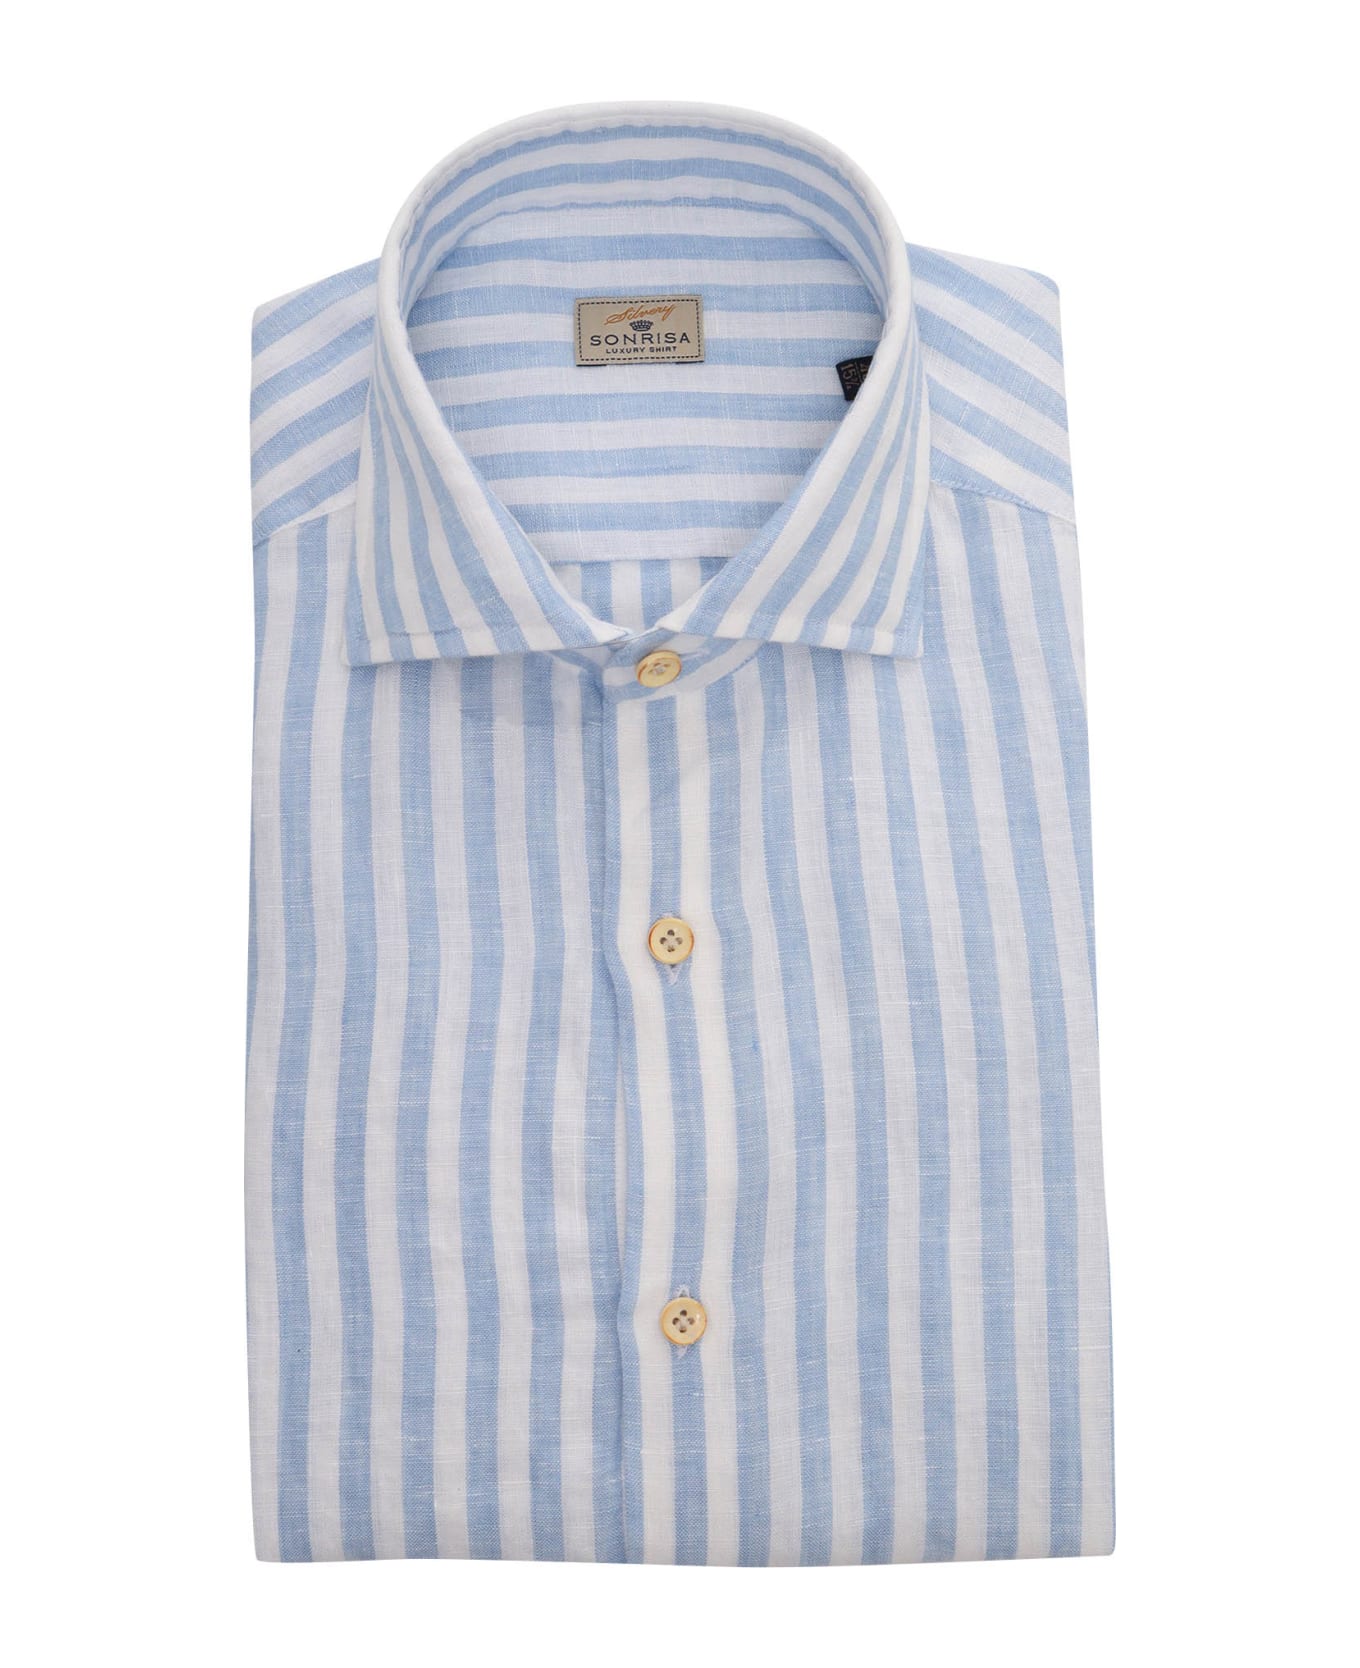 Sonrisa Light Blue Striped Shirt - MULTICOLOR